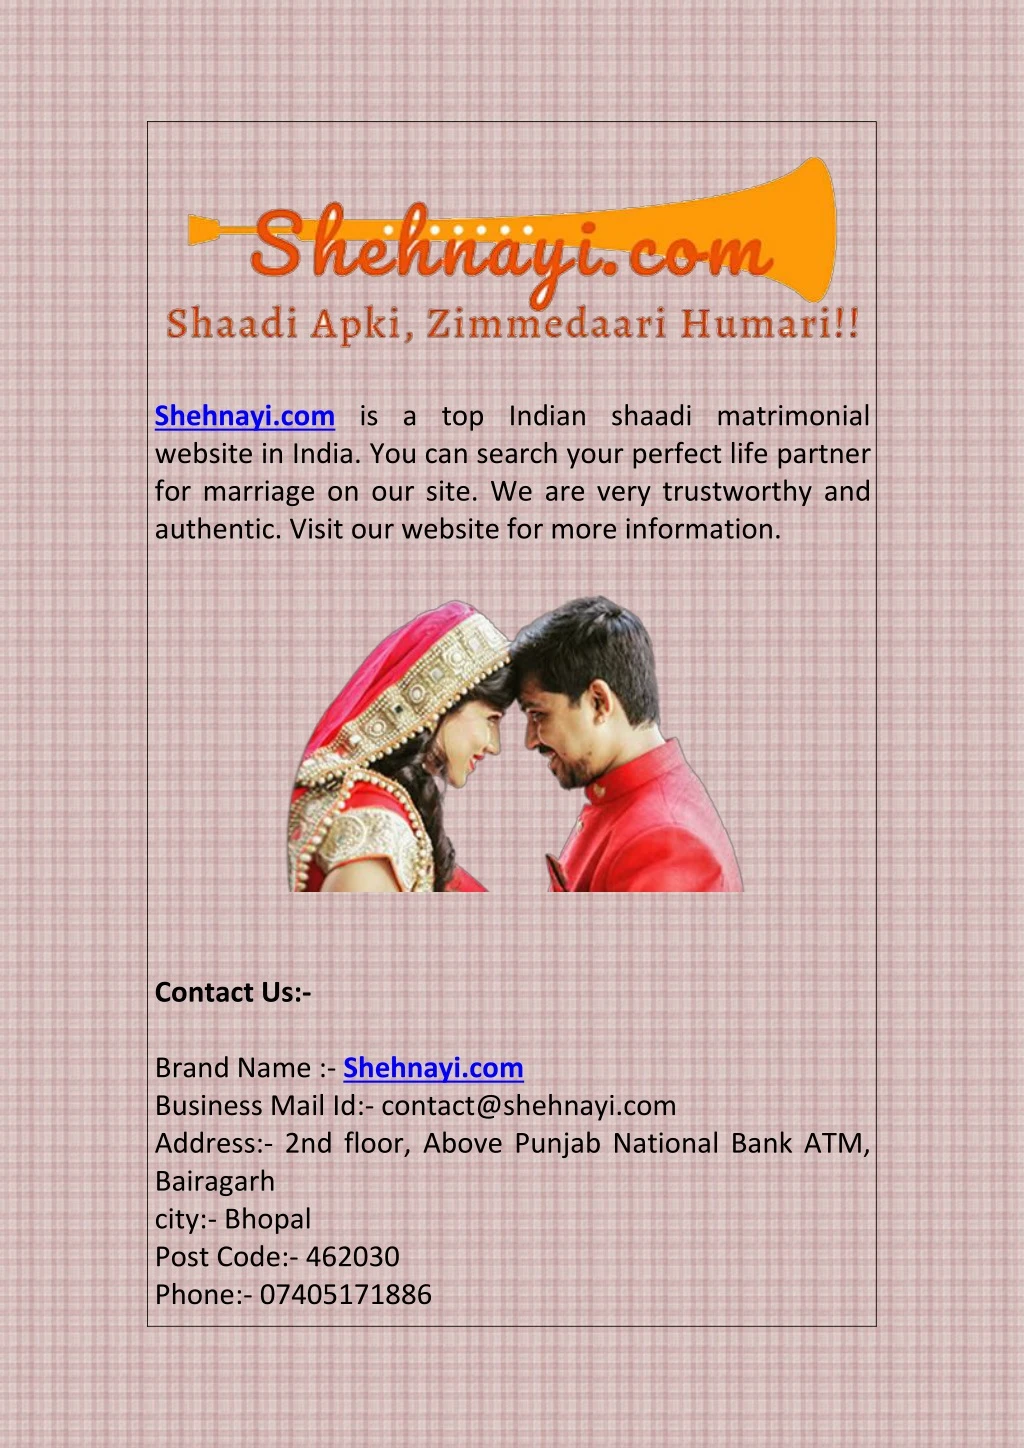 shehnayi com is a top indian shaadi matrimonial